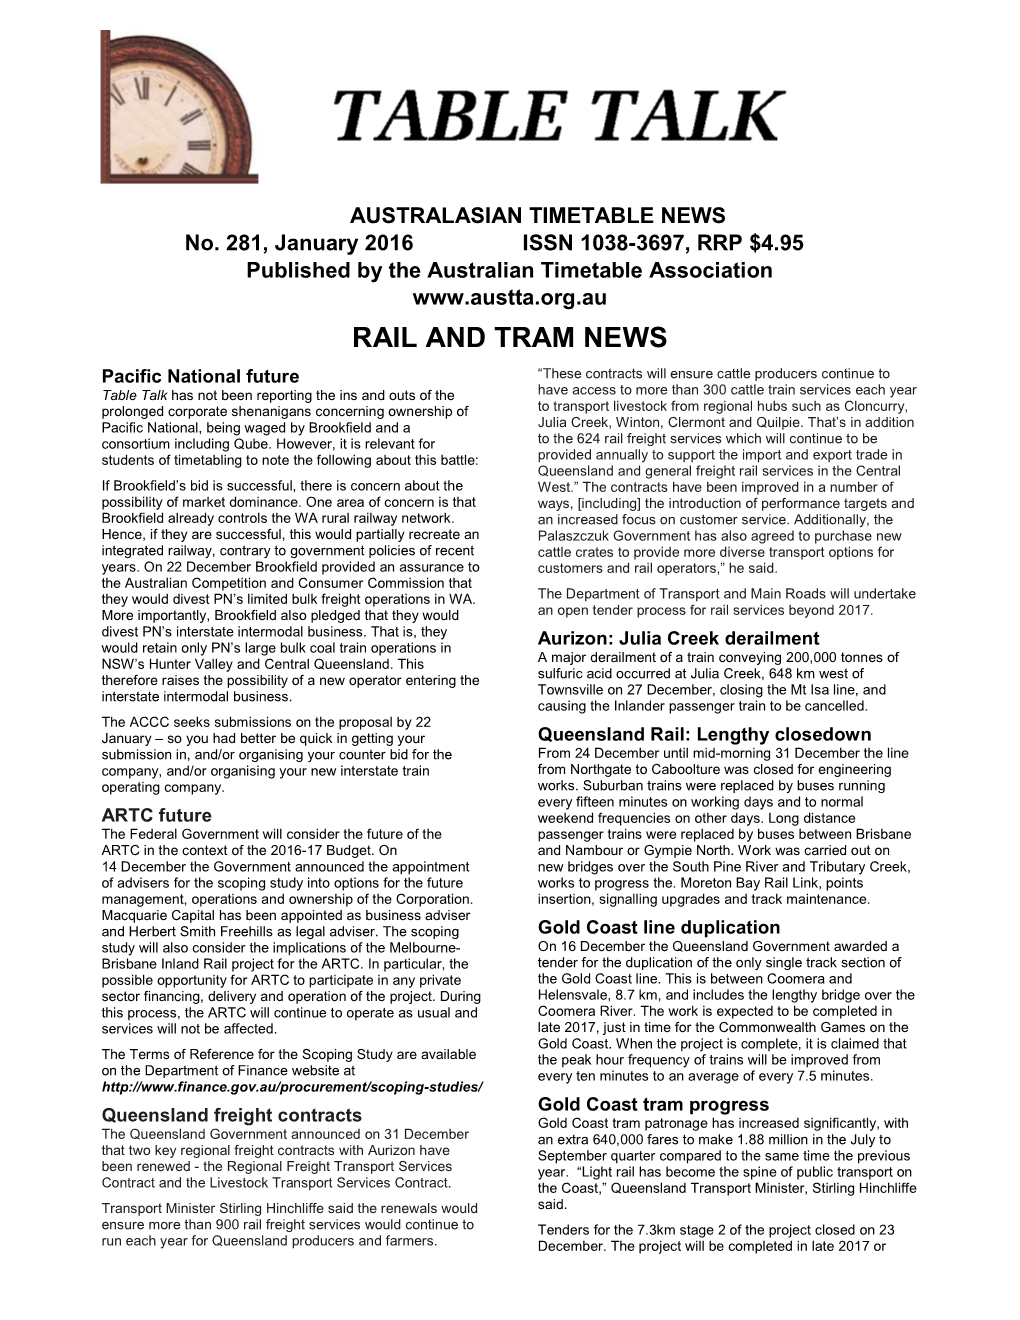 Rail and Tram News